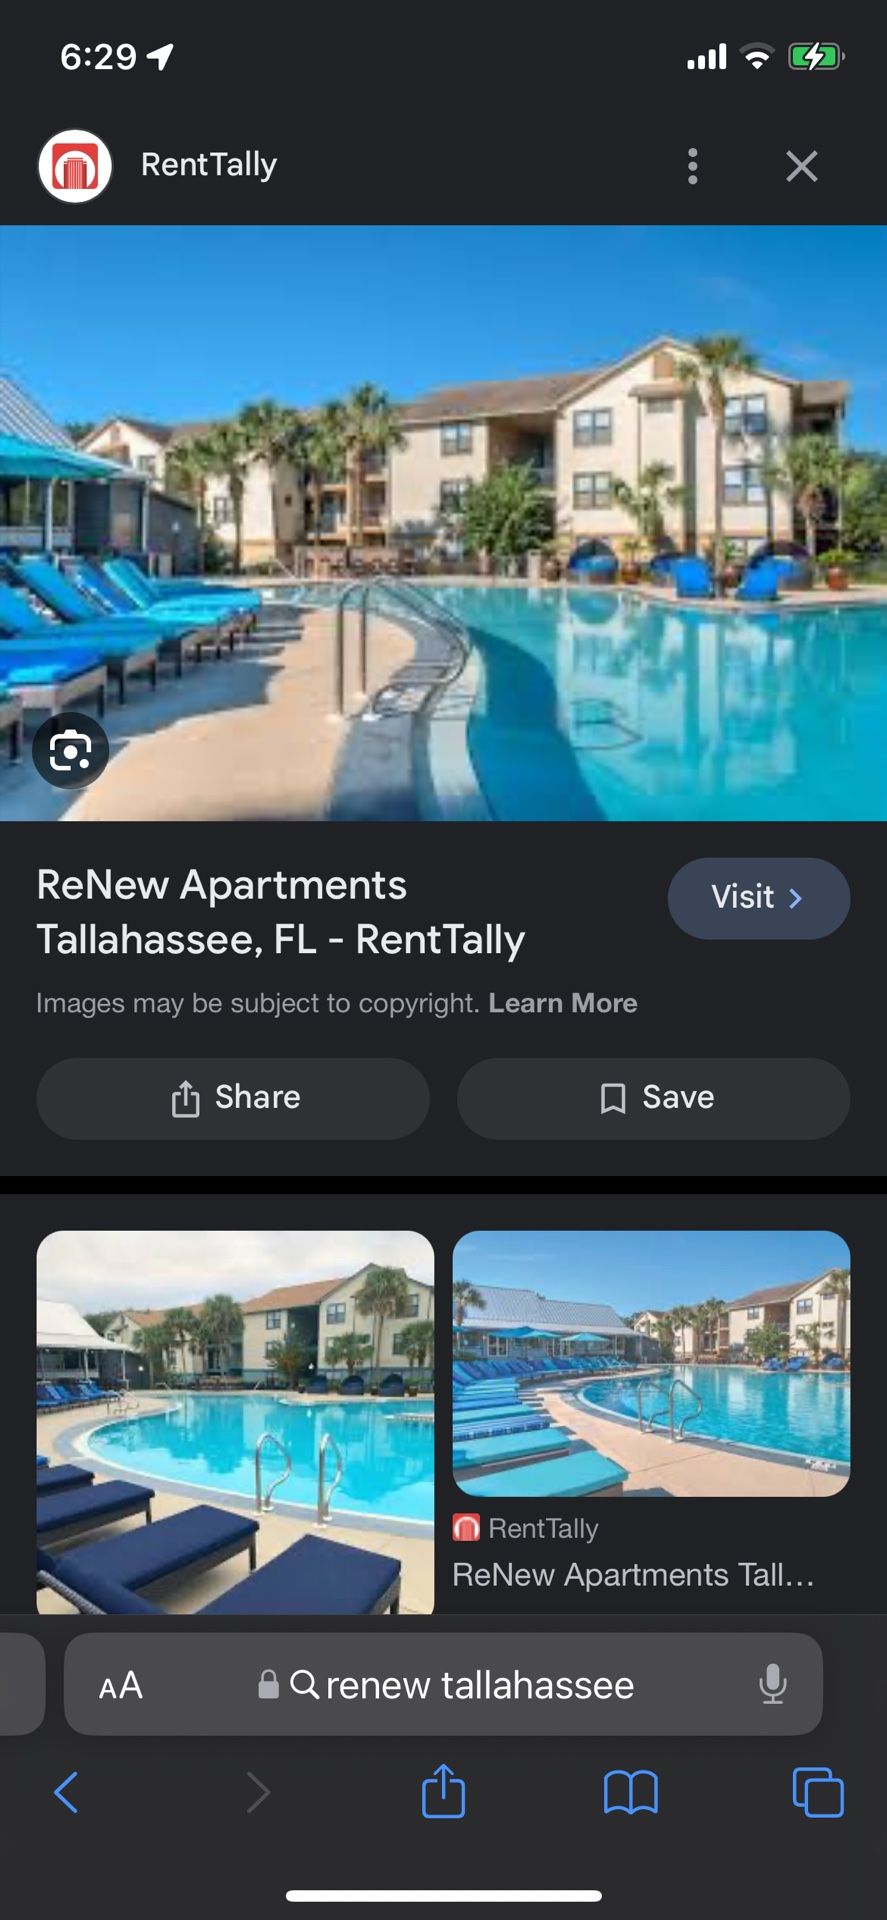 Apartment ReNew Tallahassee